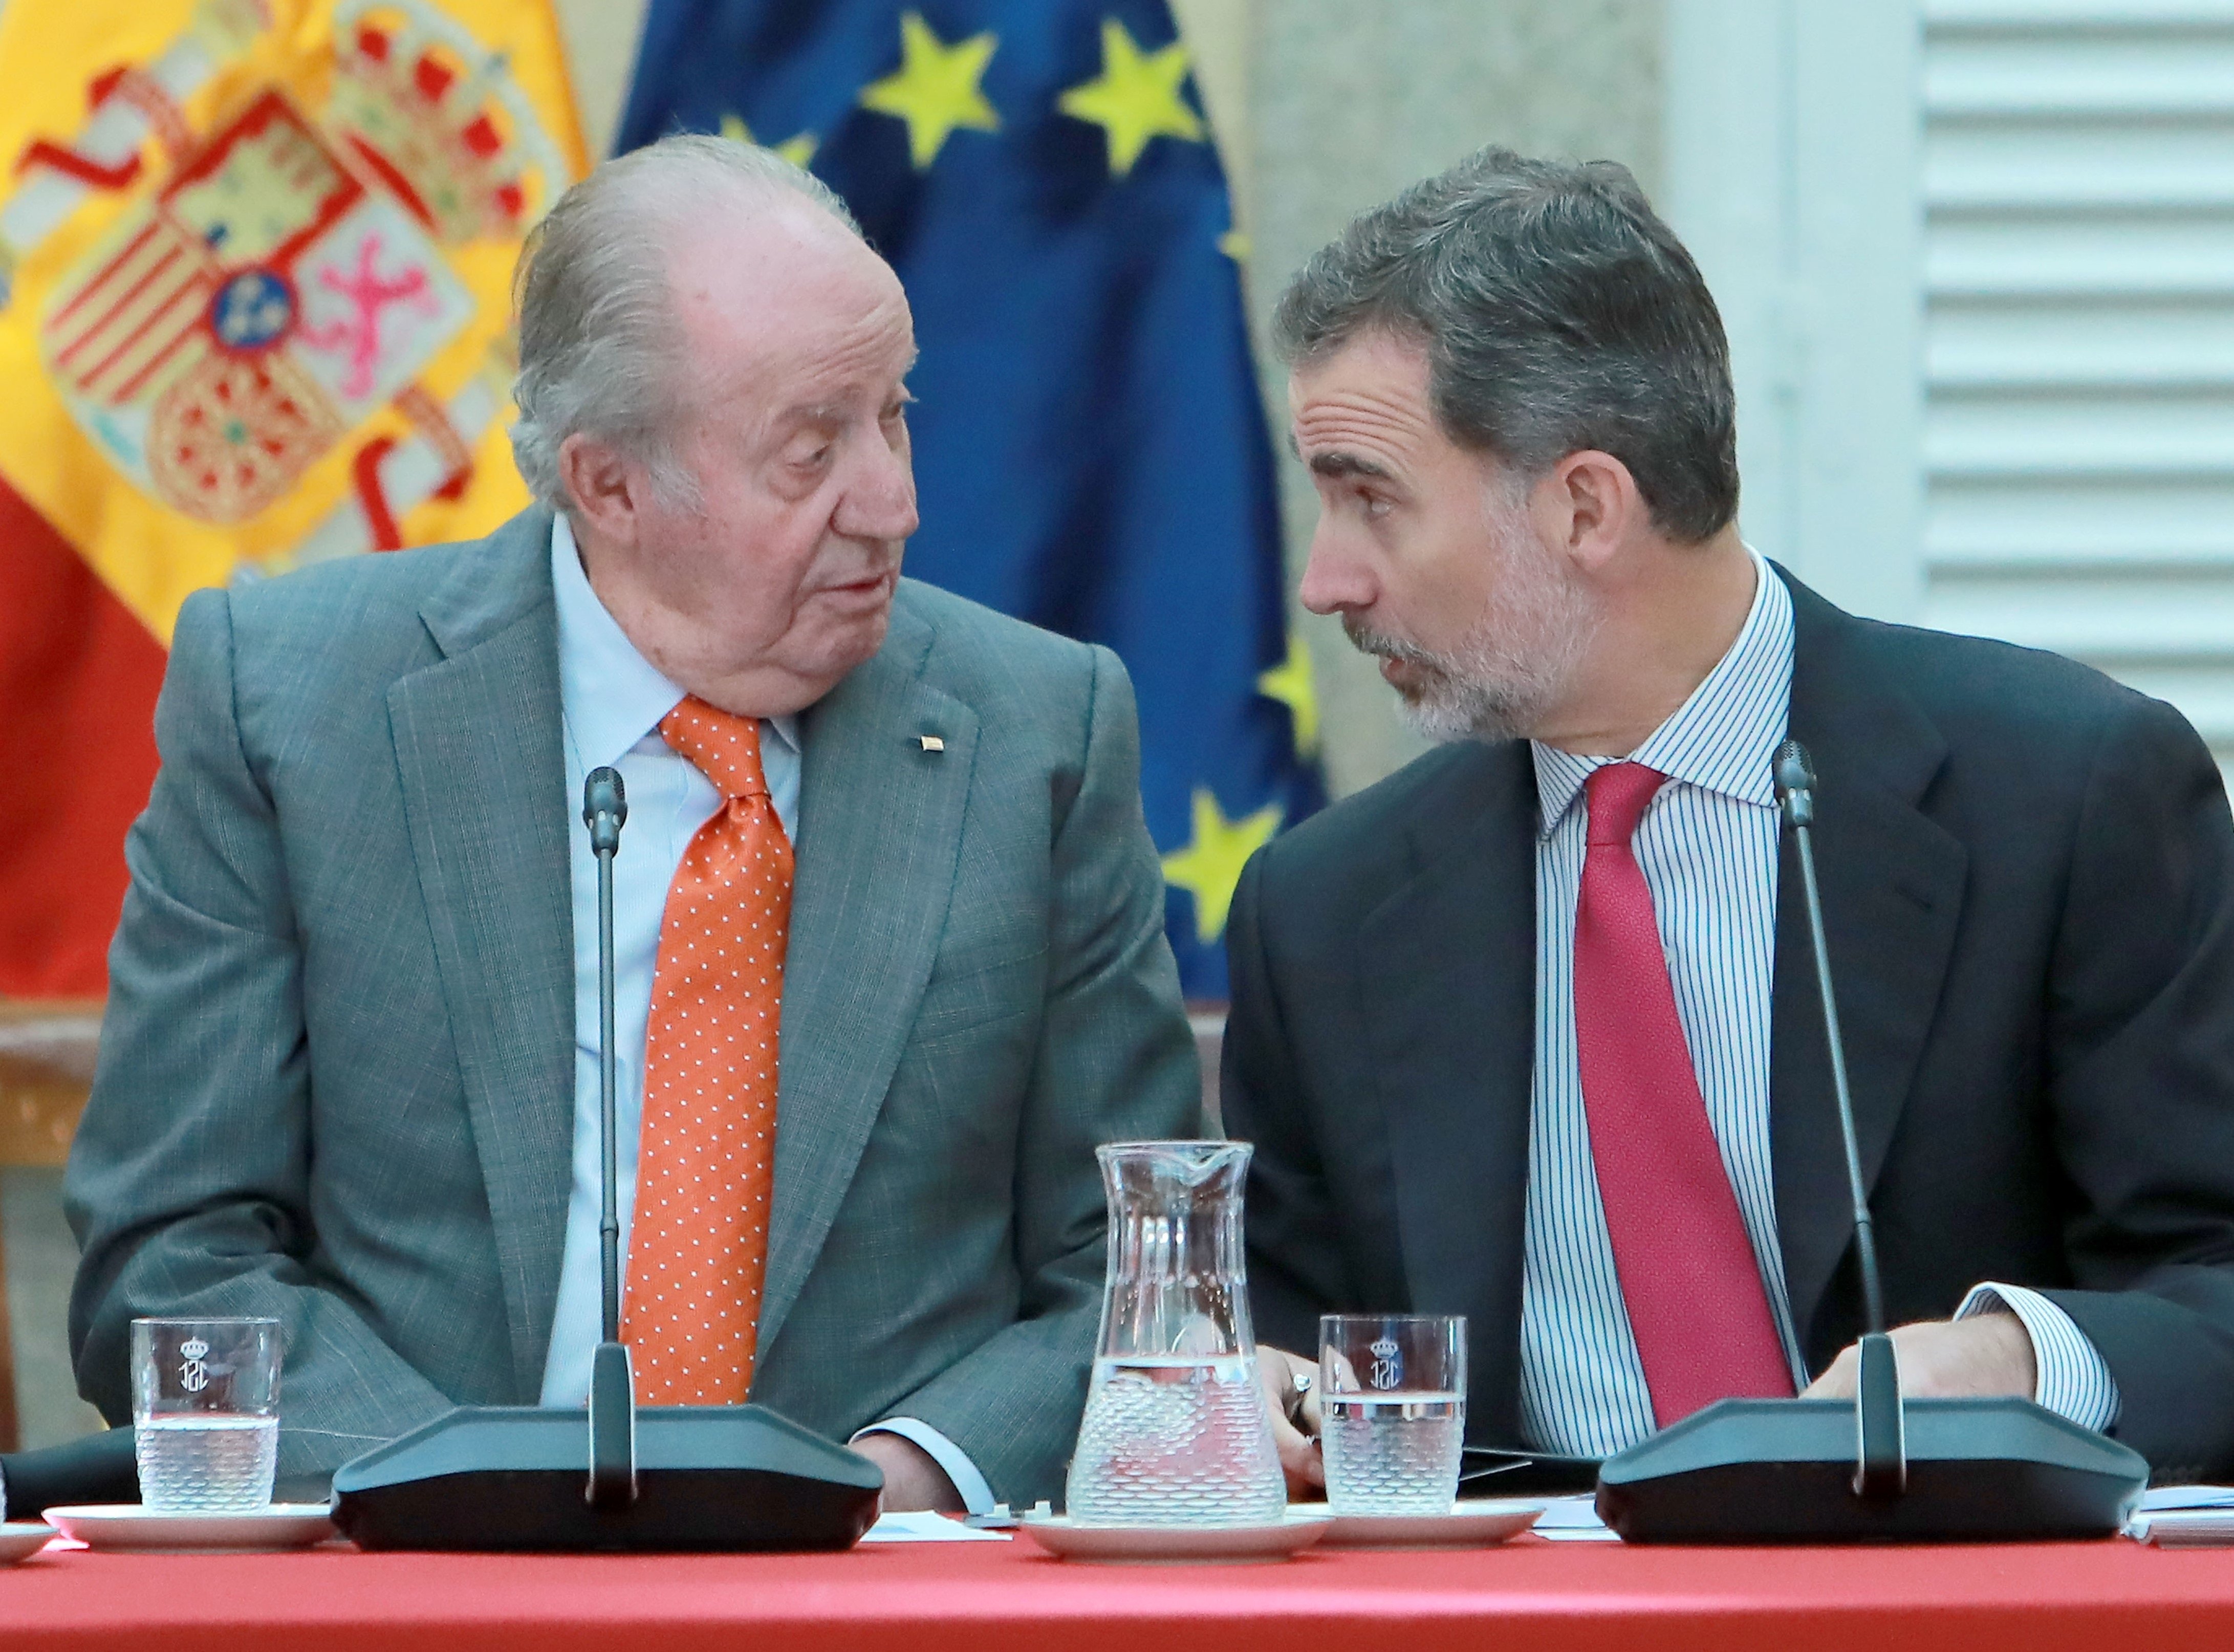 Òmnium takes legal action against Spain's Juan Carlos I on corruption issue